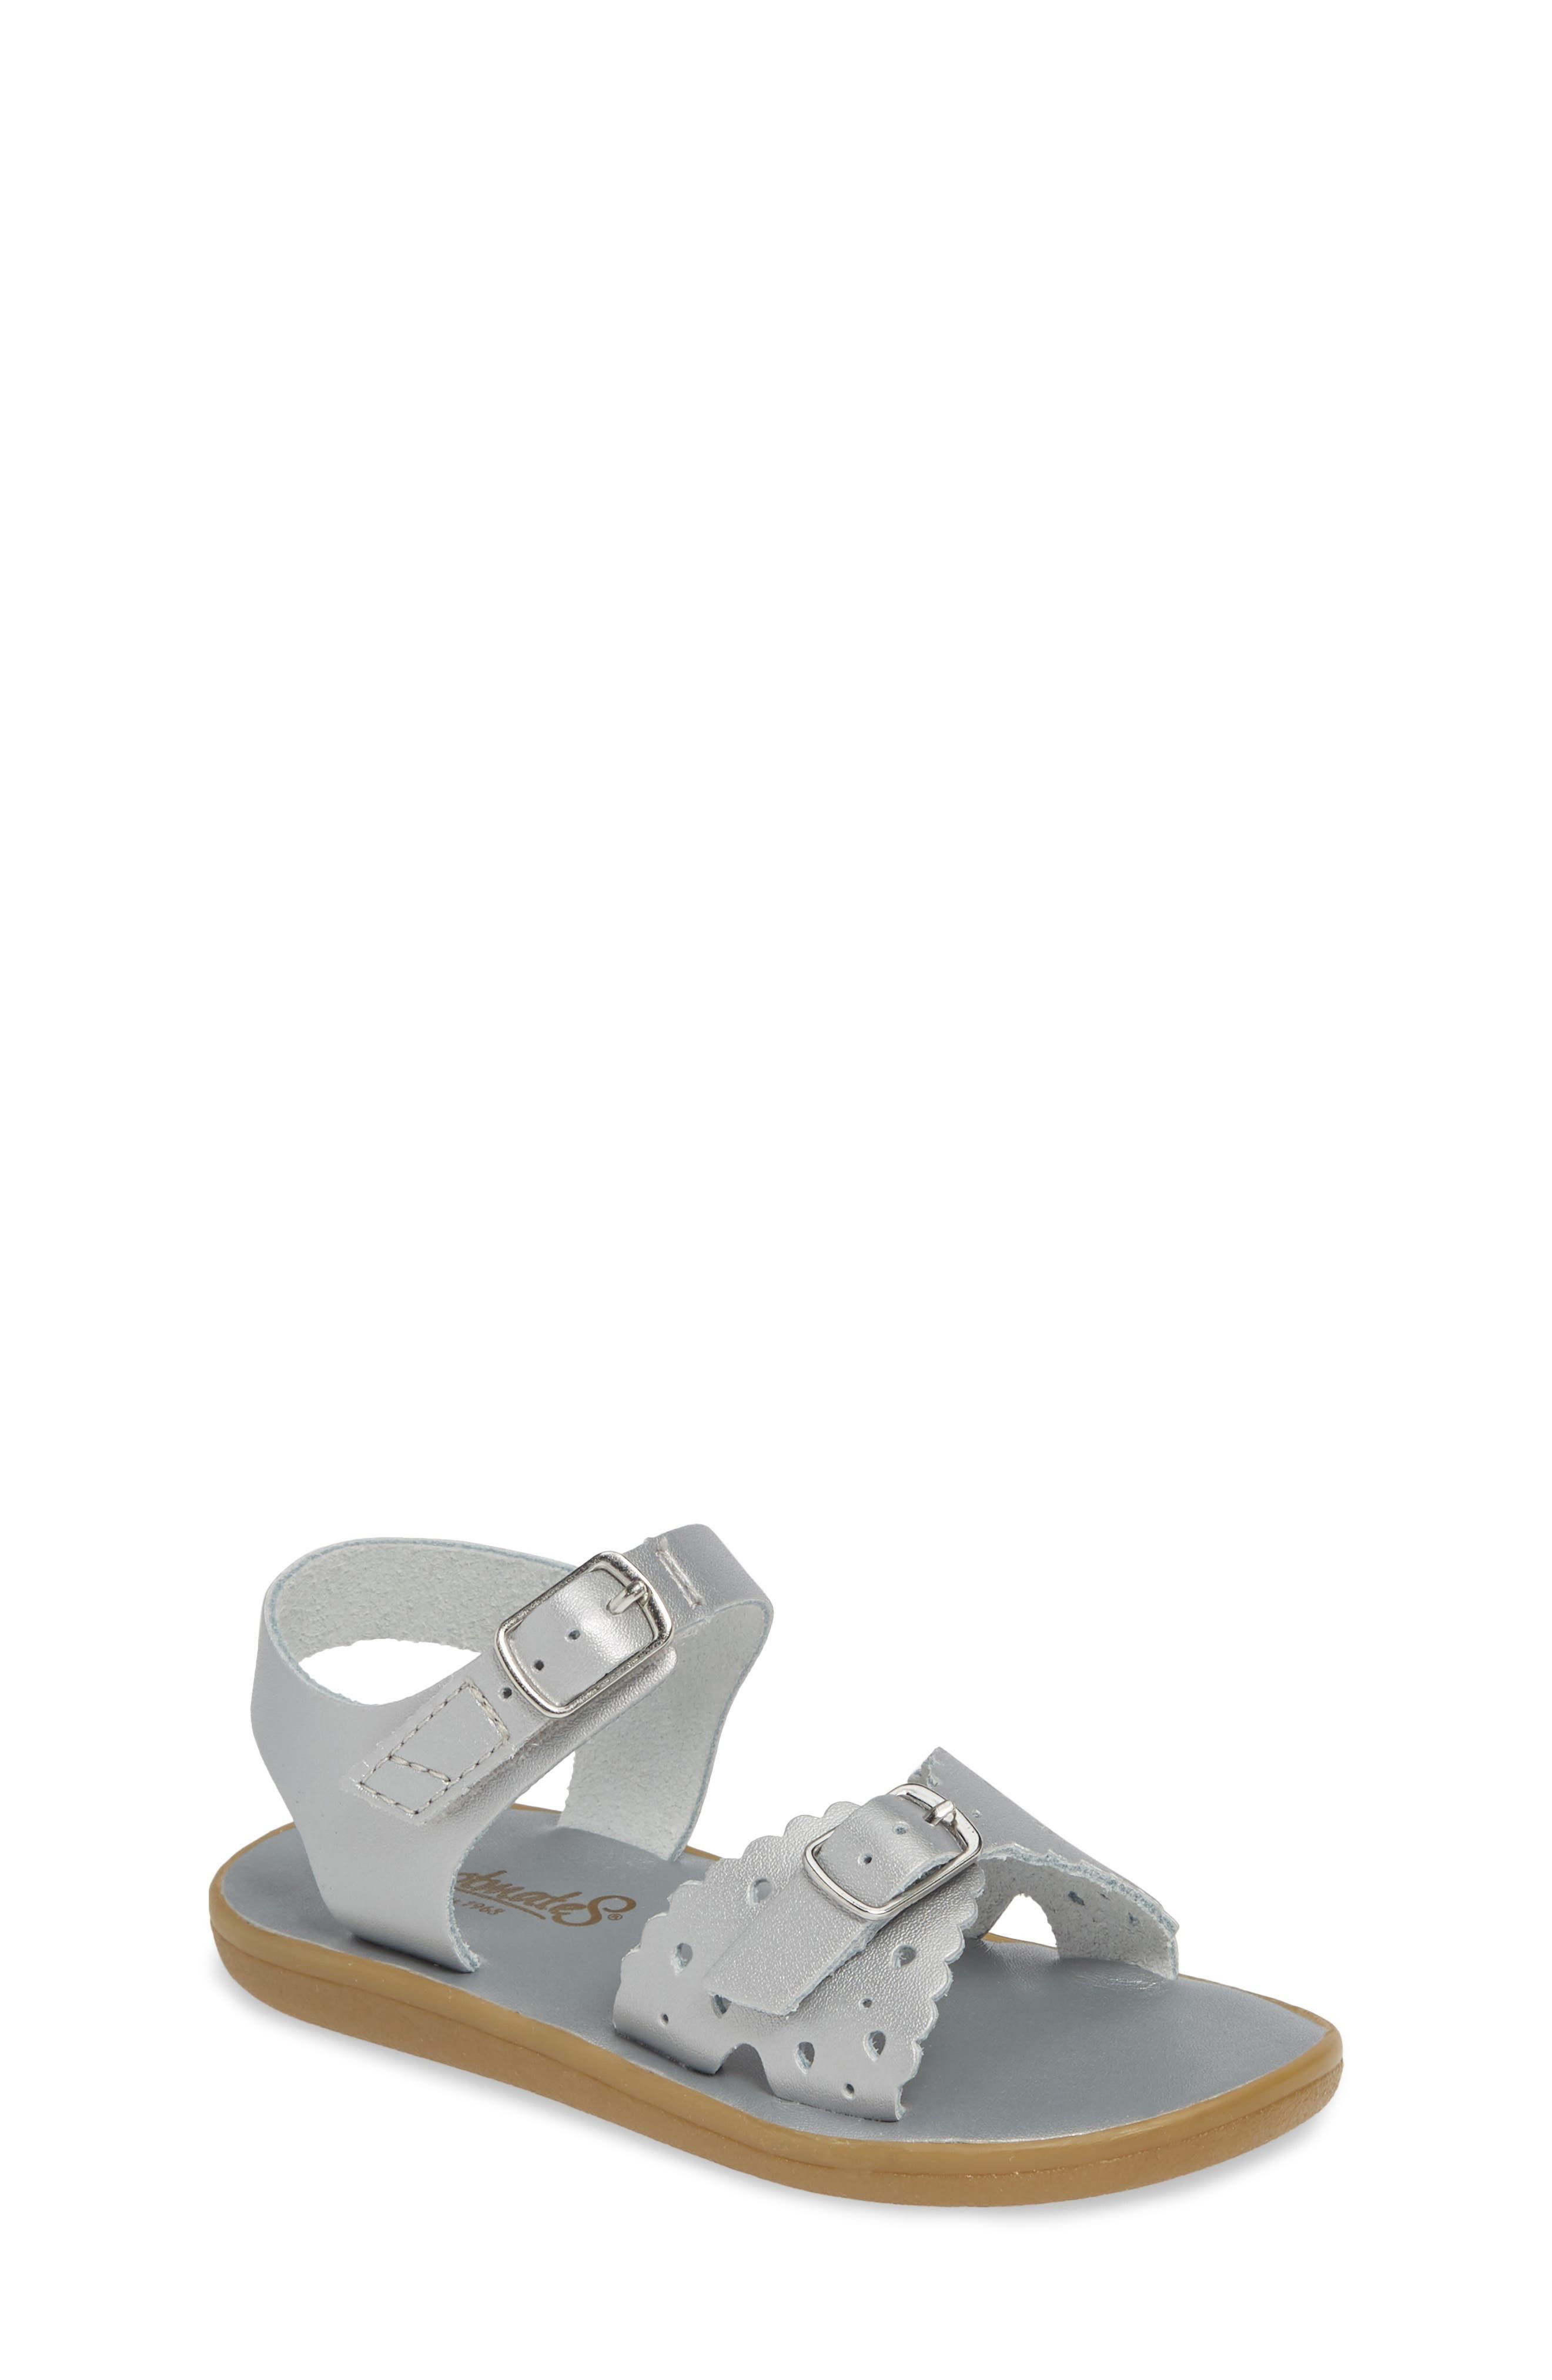 Footmates Ariel Waterproof Sandal in Silver at Nordstrom, Size 13 M | Nordstrom